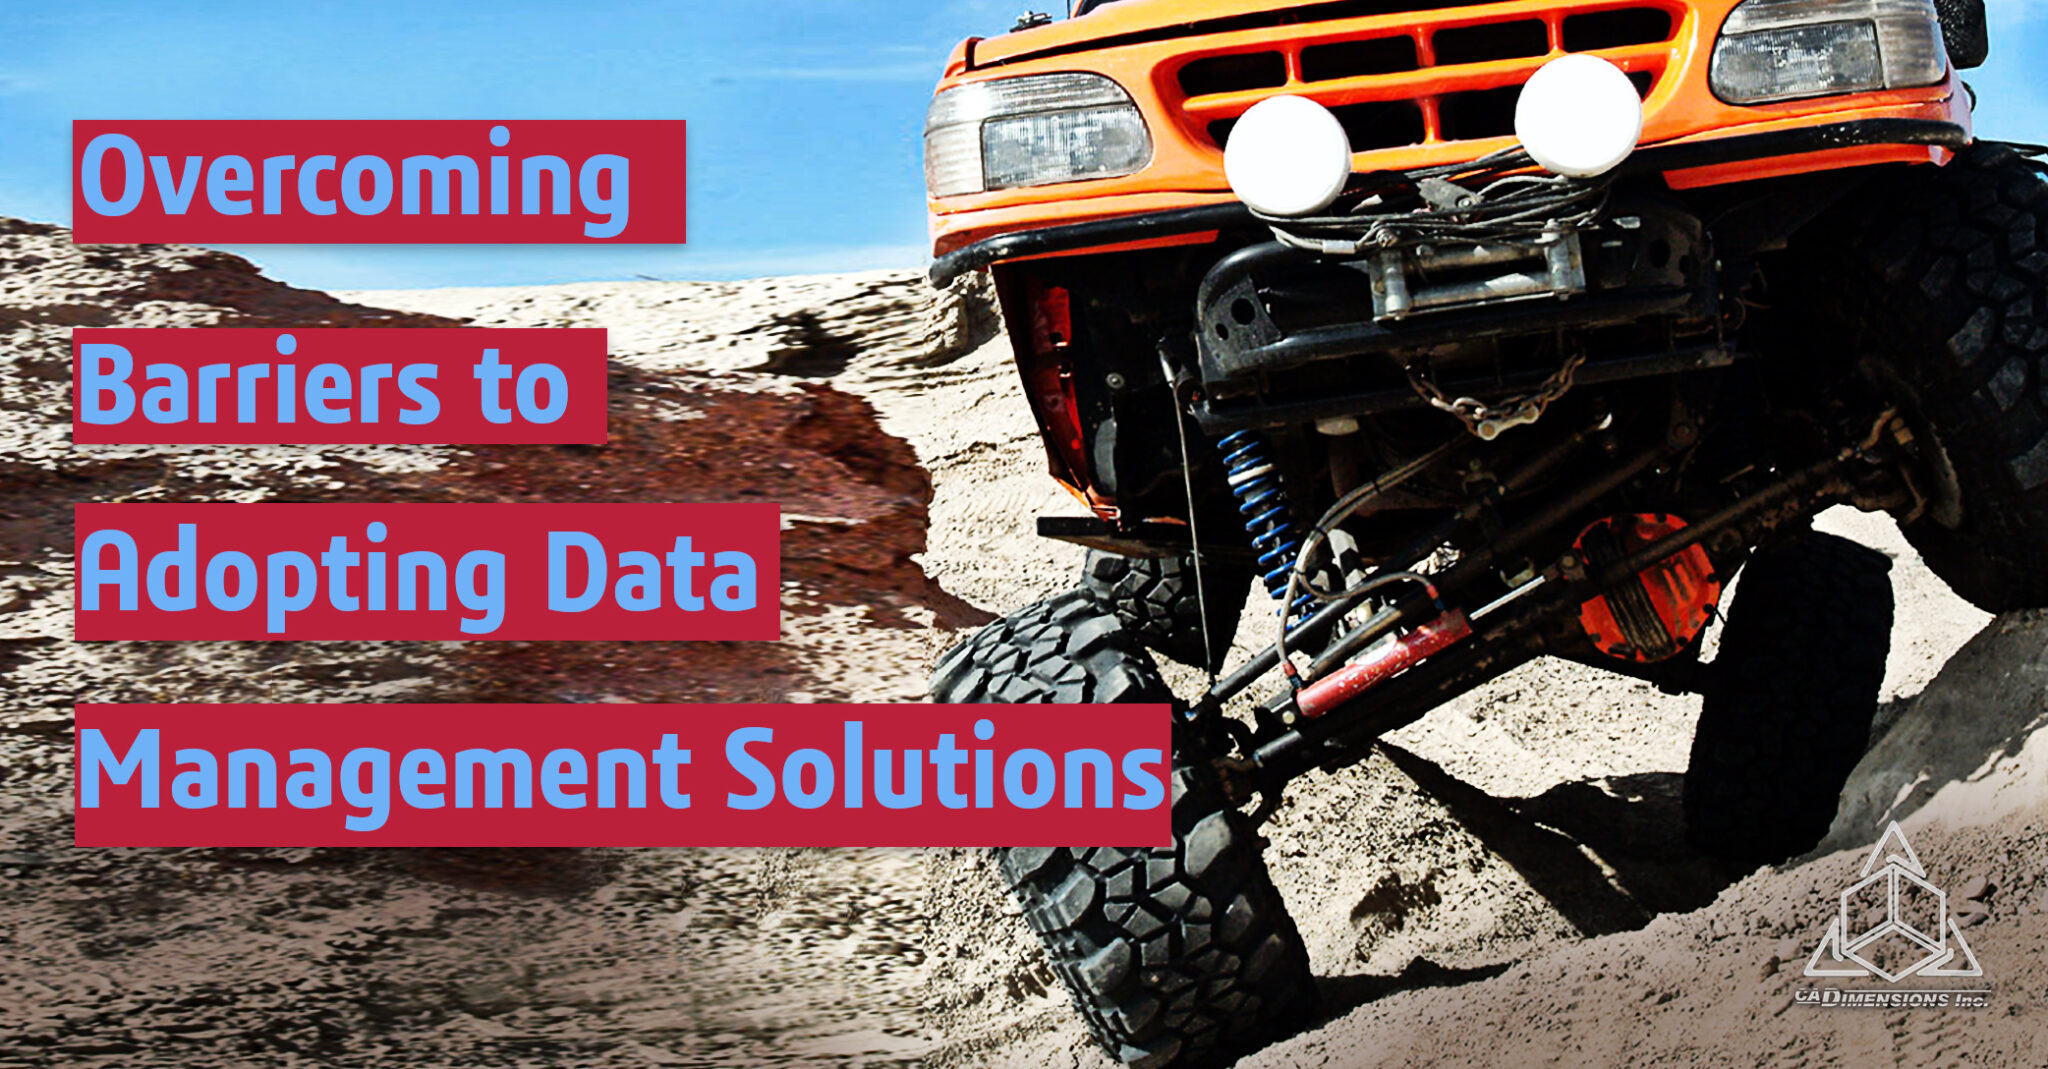 Adopting a Data Management Solution